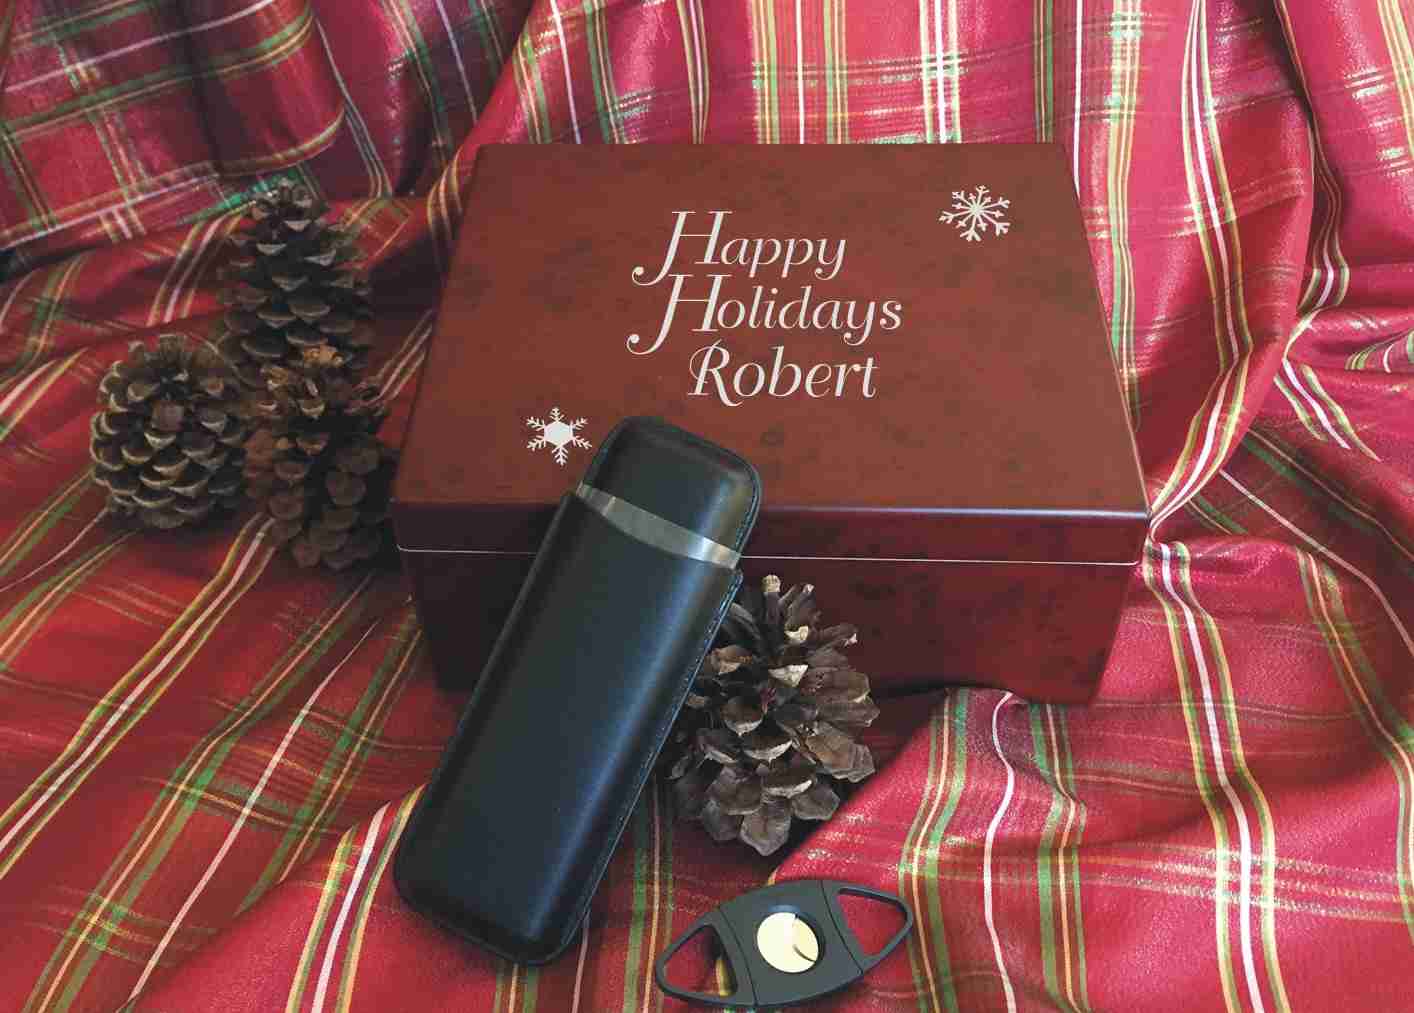 Personalized Cherry Finish Humidor Gift Set Rocky Patel - Holiday Edition